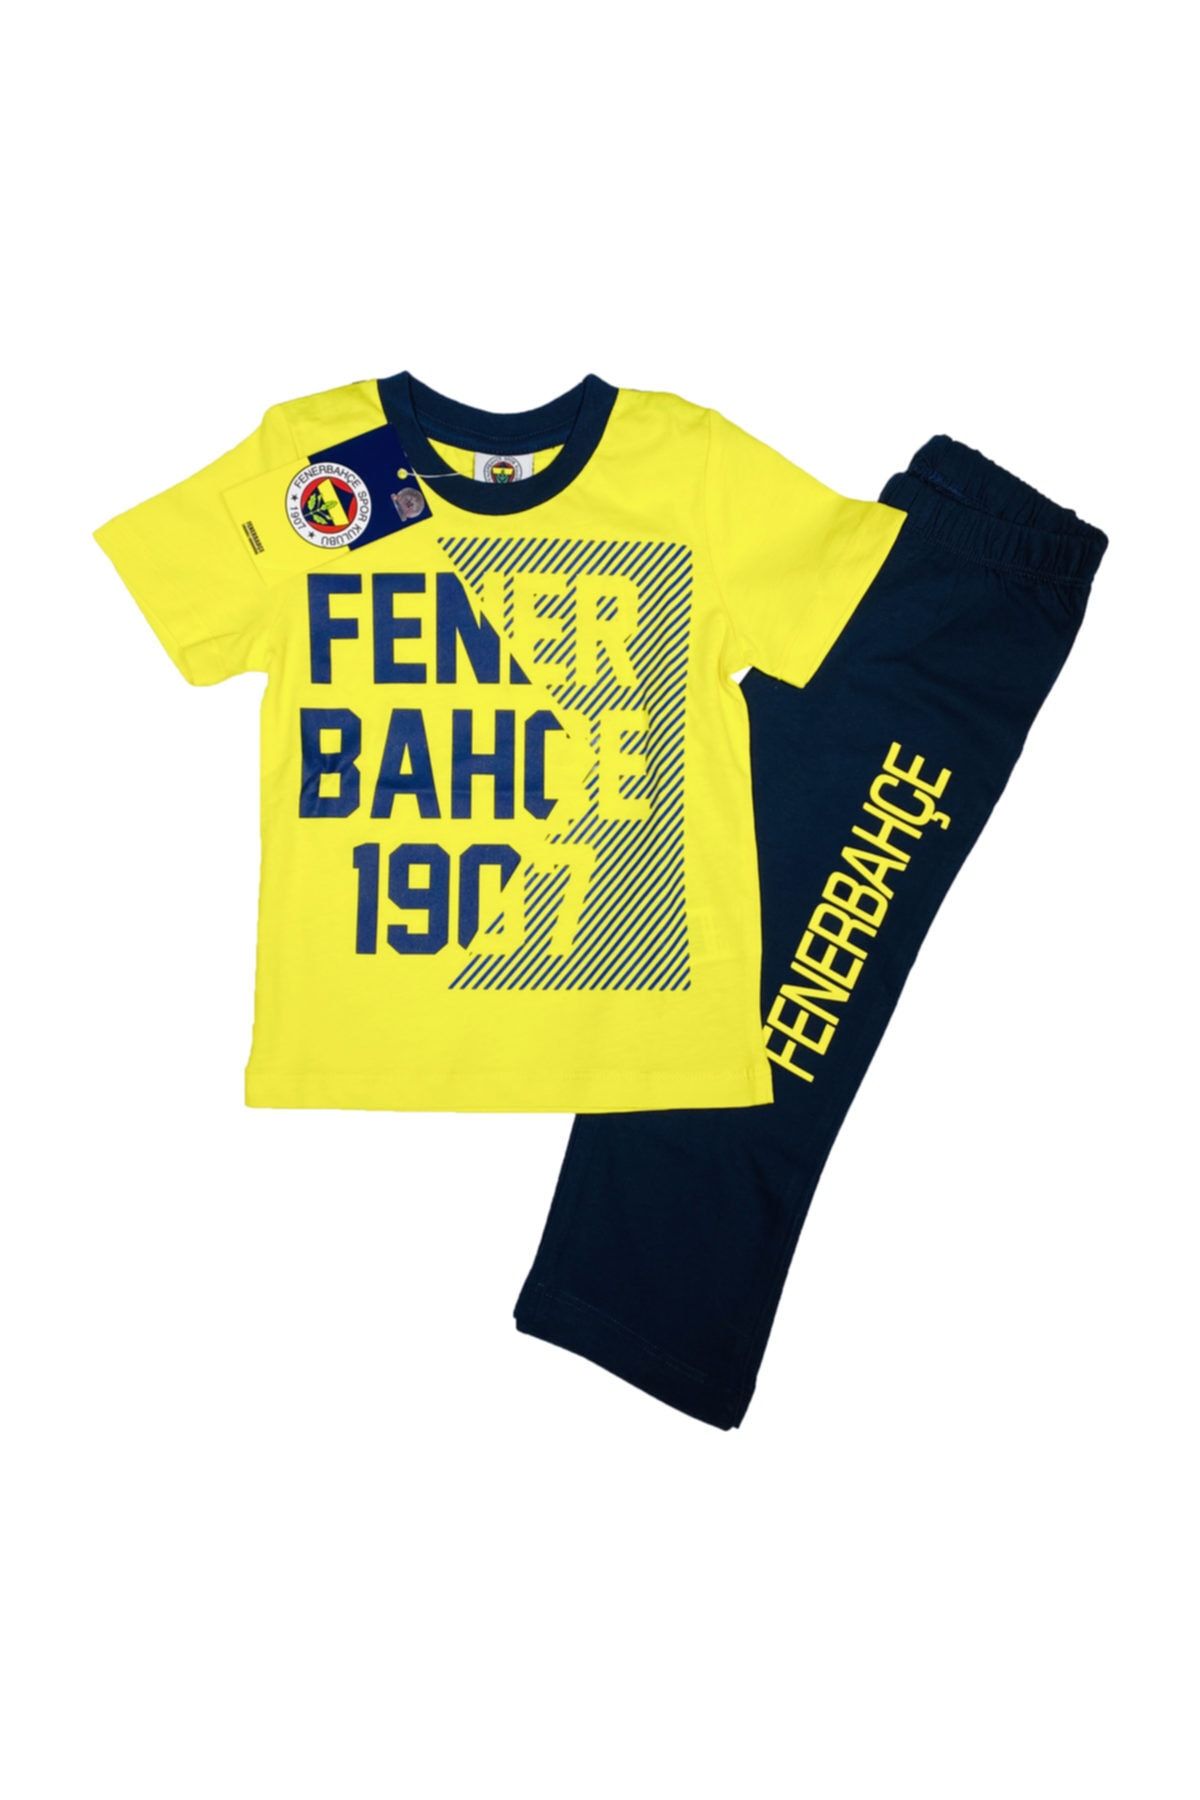 Fenerbahçe Fenerbahçe T-shirt Takım